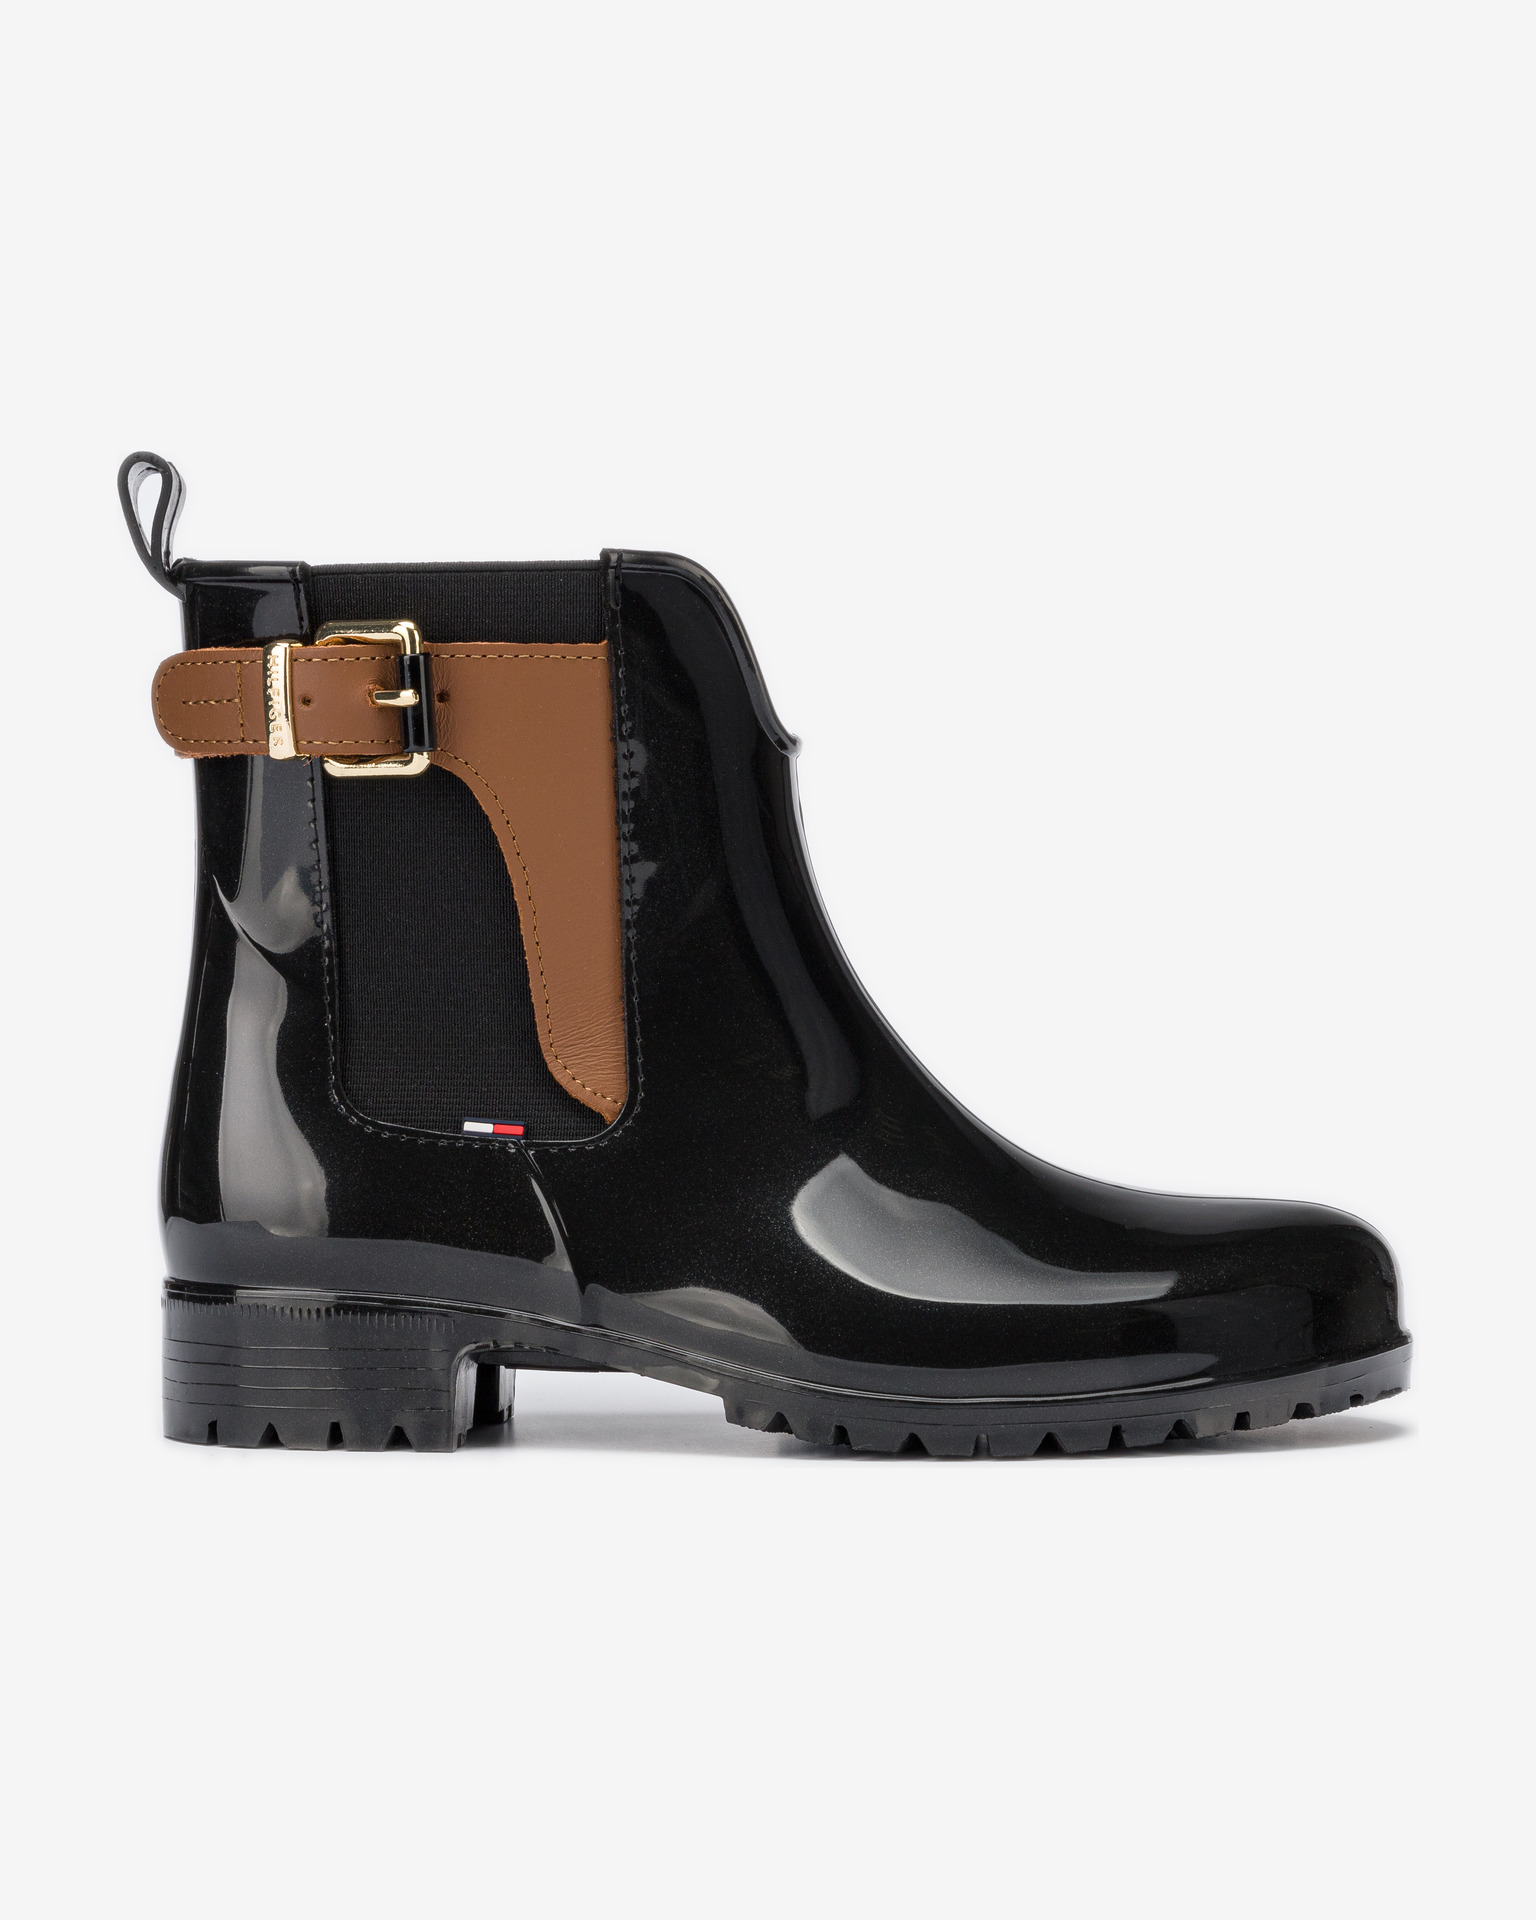 hilfiger rain boots